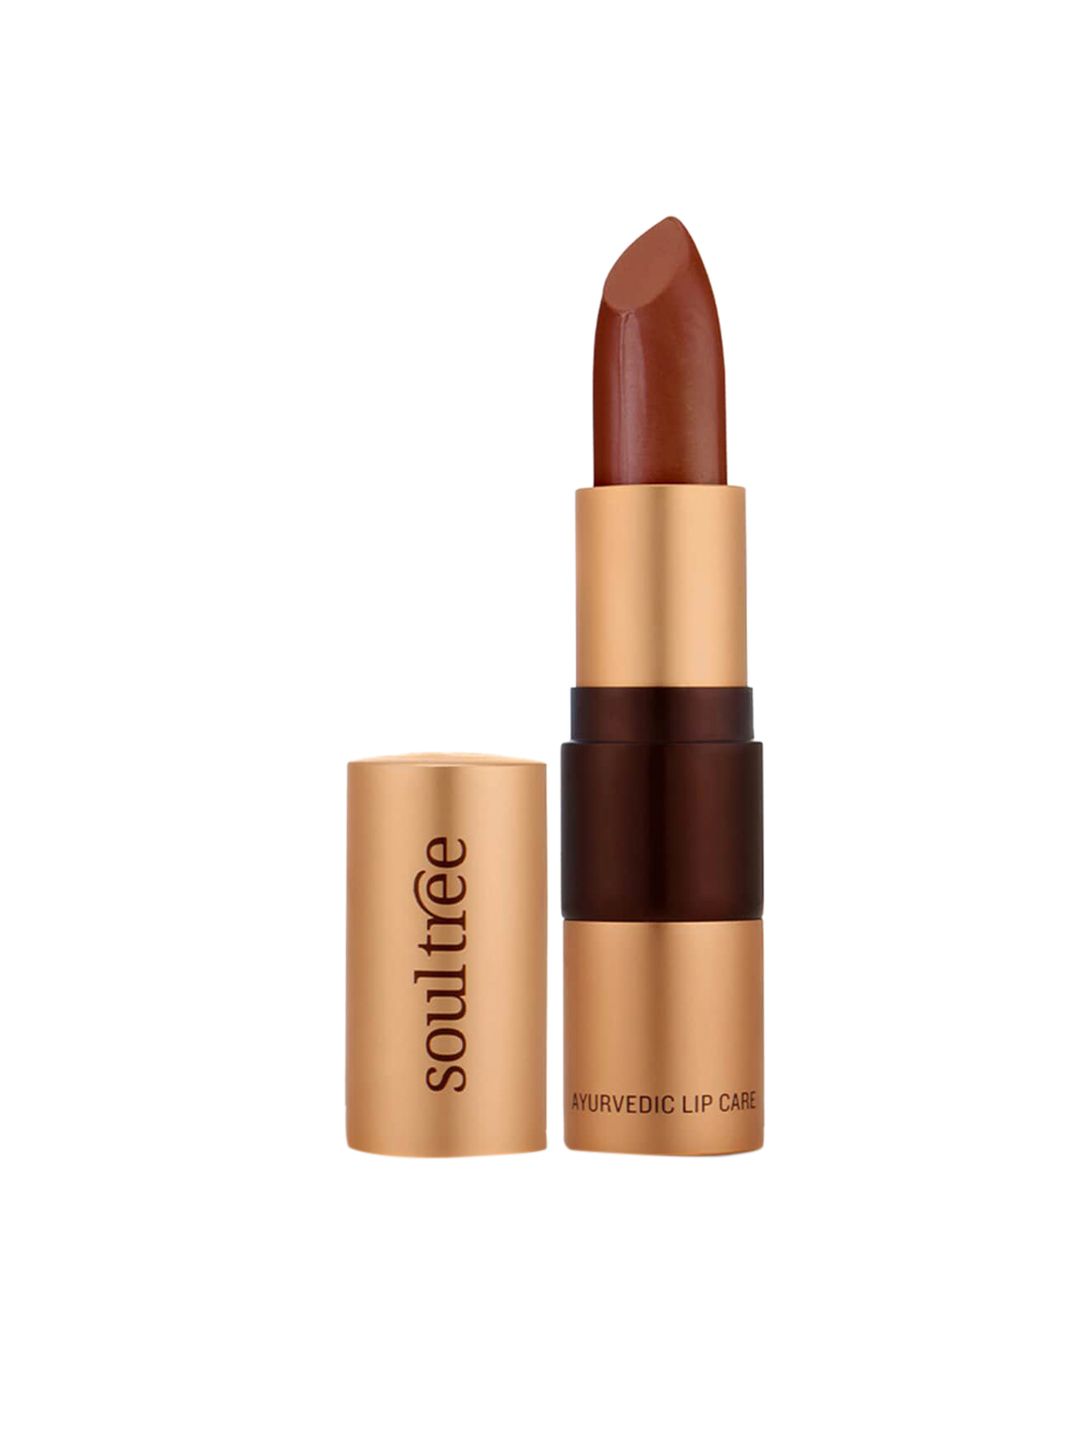 Soultree Ayurvedic Lipstick Copper Mine 213 - 4gm Price in India